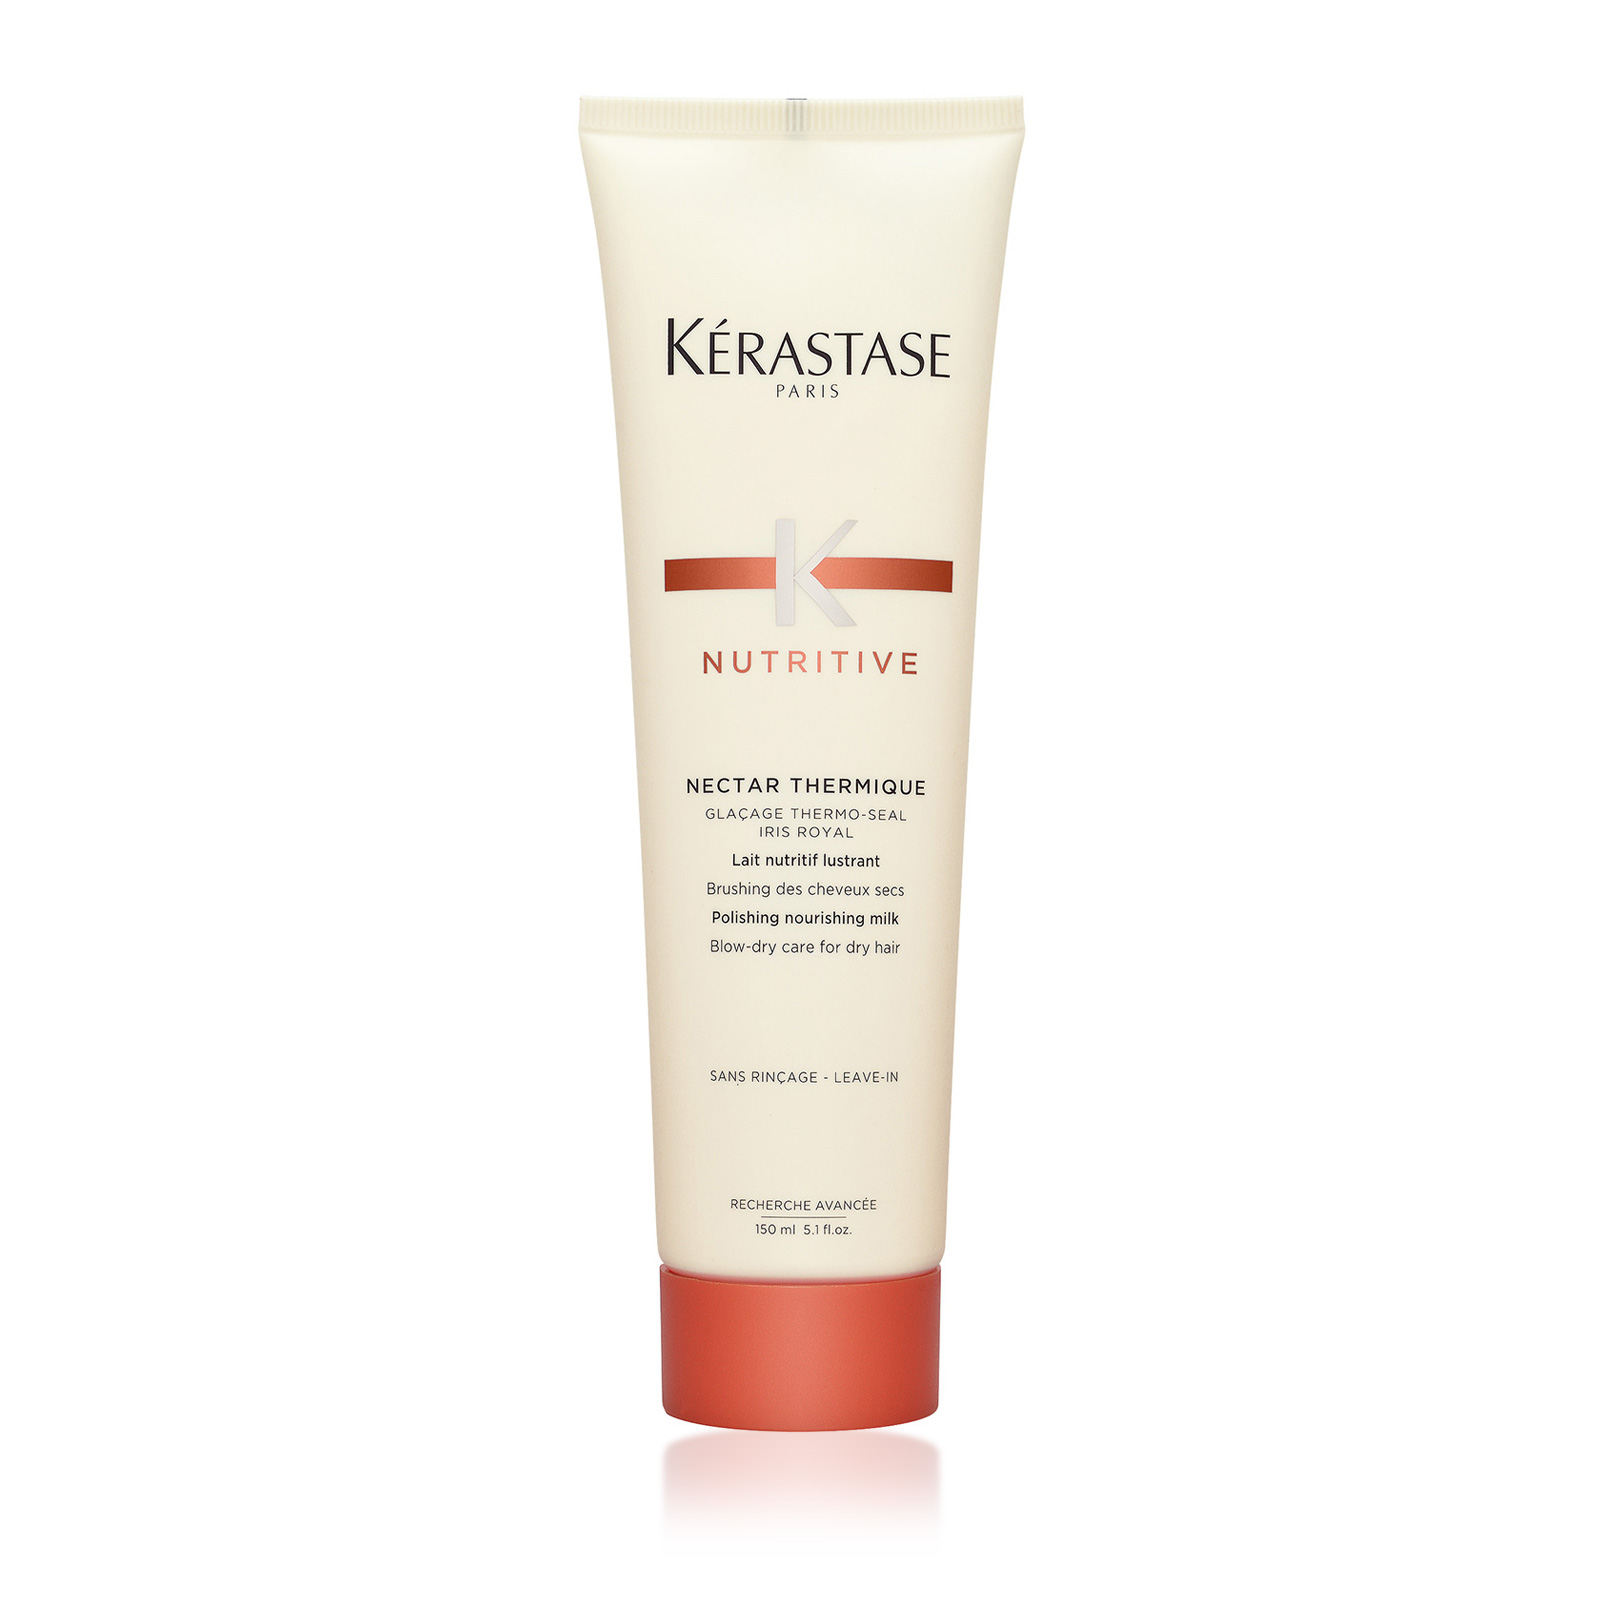 Kérastase Paris Nutritive Nectar Polishing Nourishing (Blow Dry Care for Dry Hair)150 ml 5.1 oz AKB